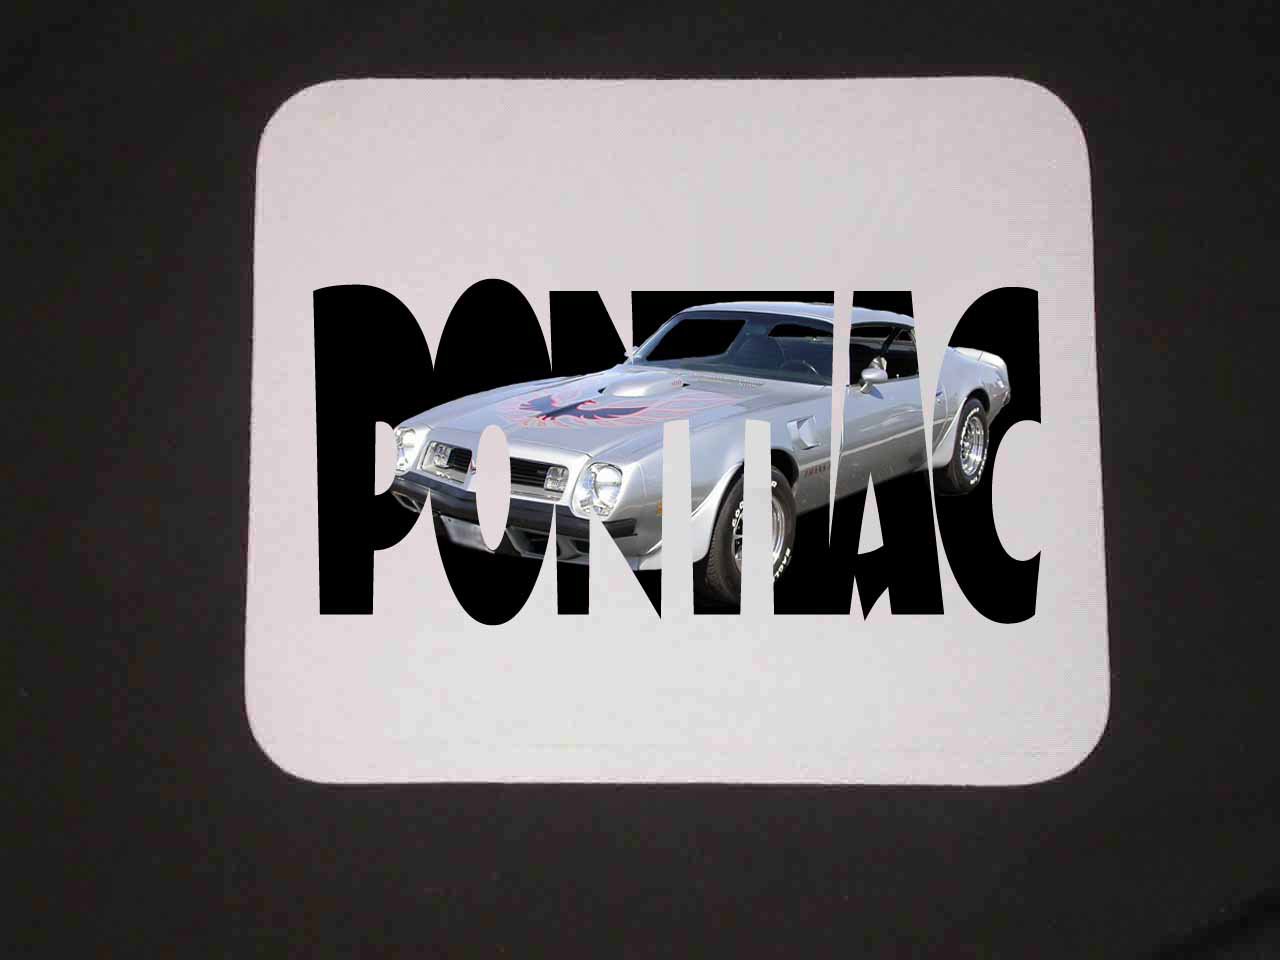 New 1975 Silver Pontiac Trans AM w/ letters Mousepad!